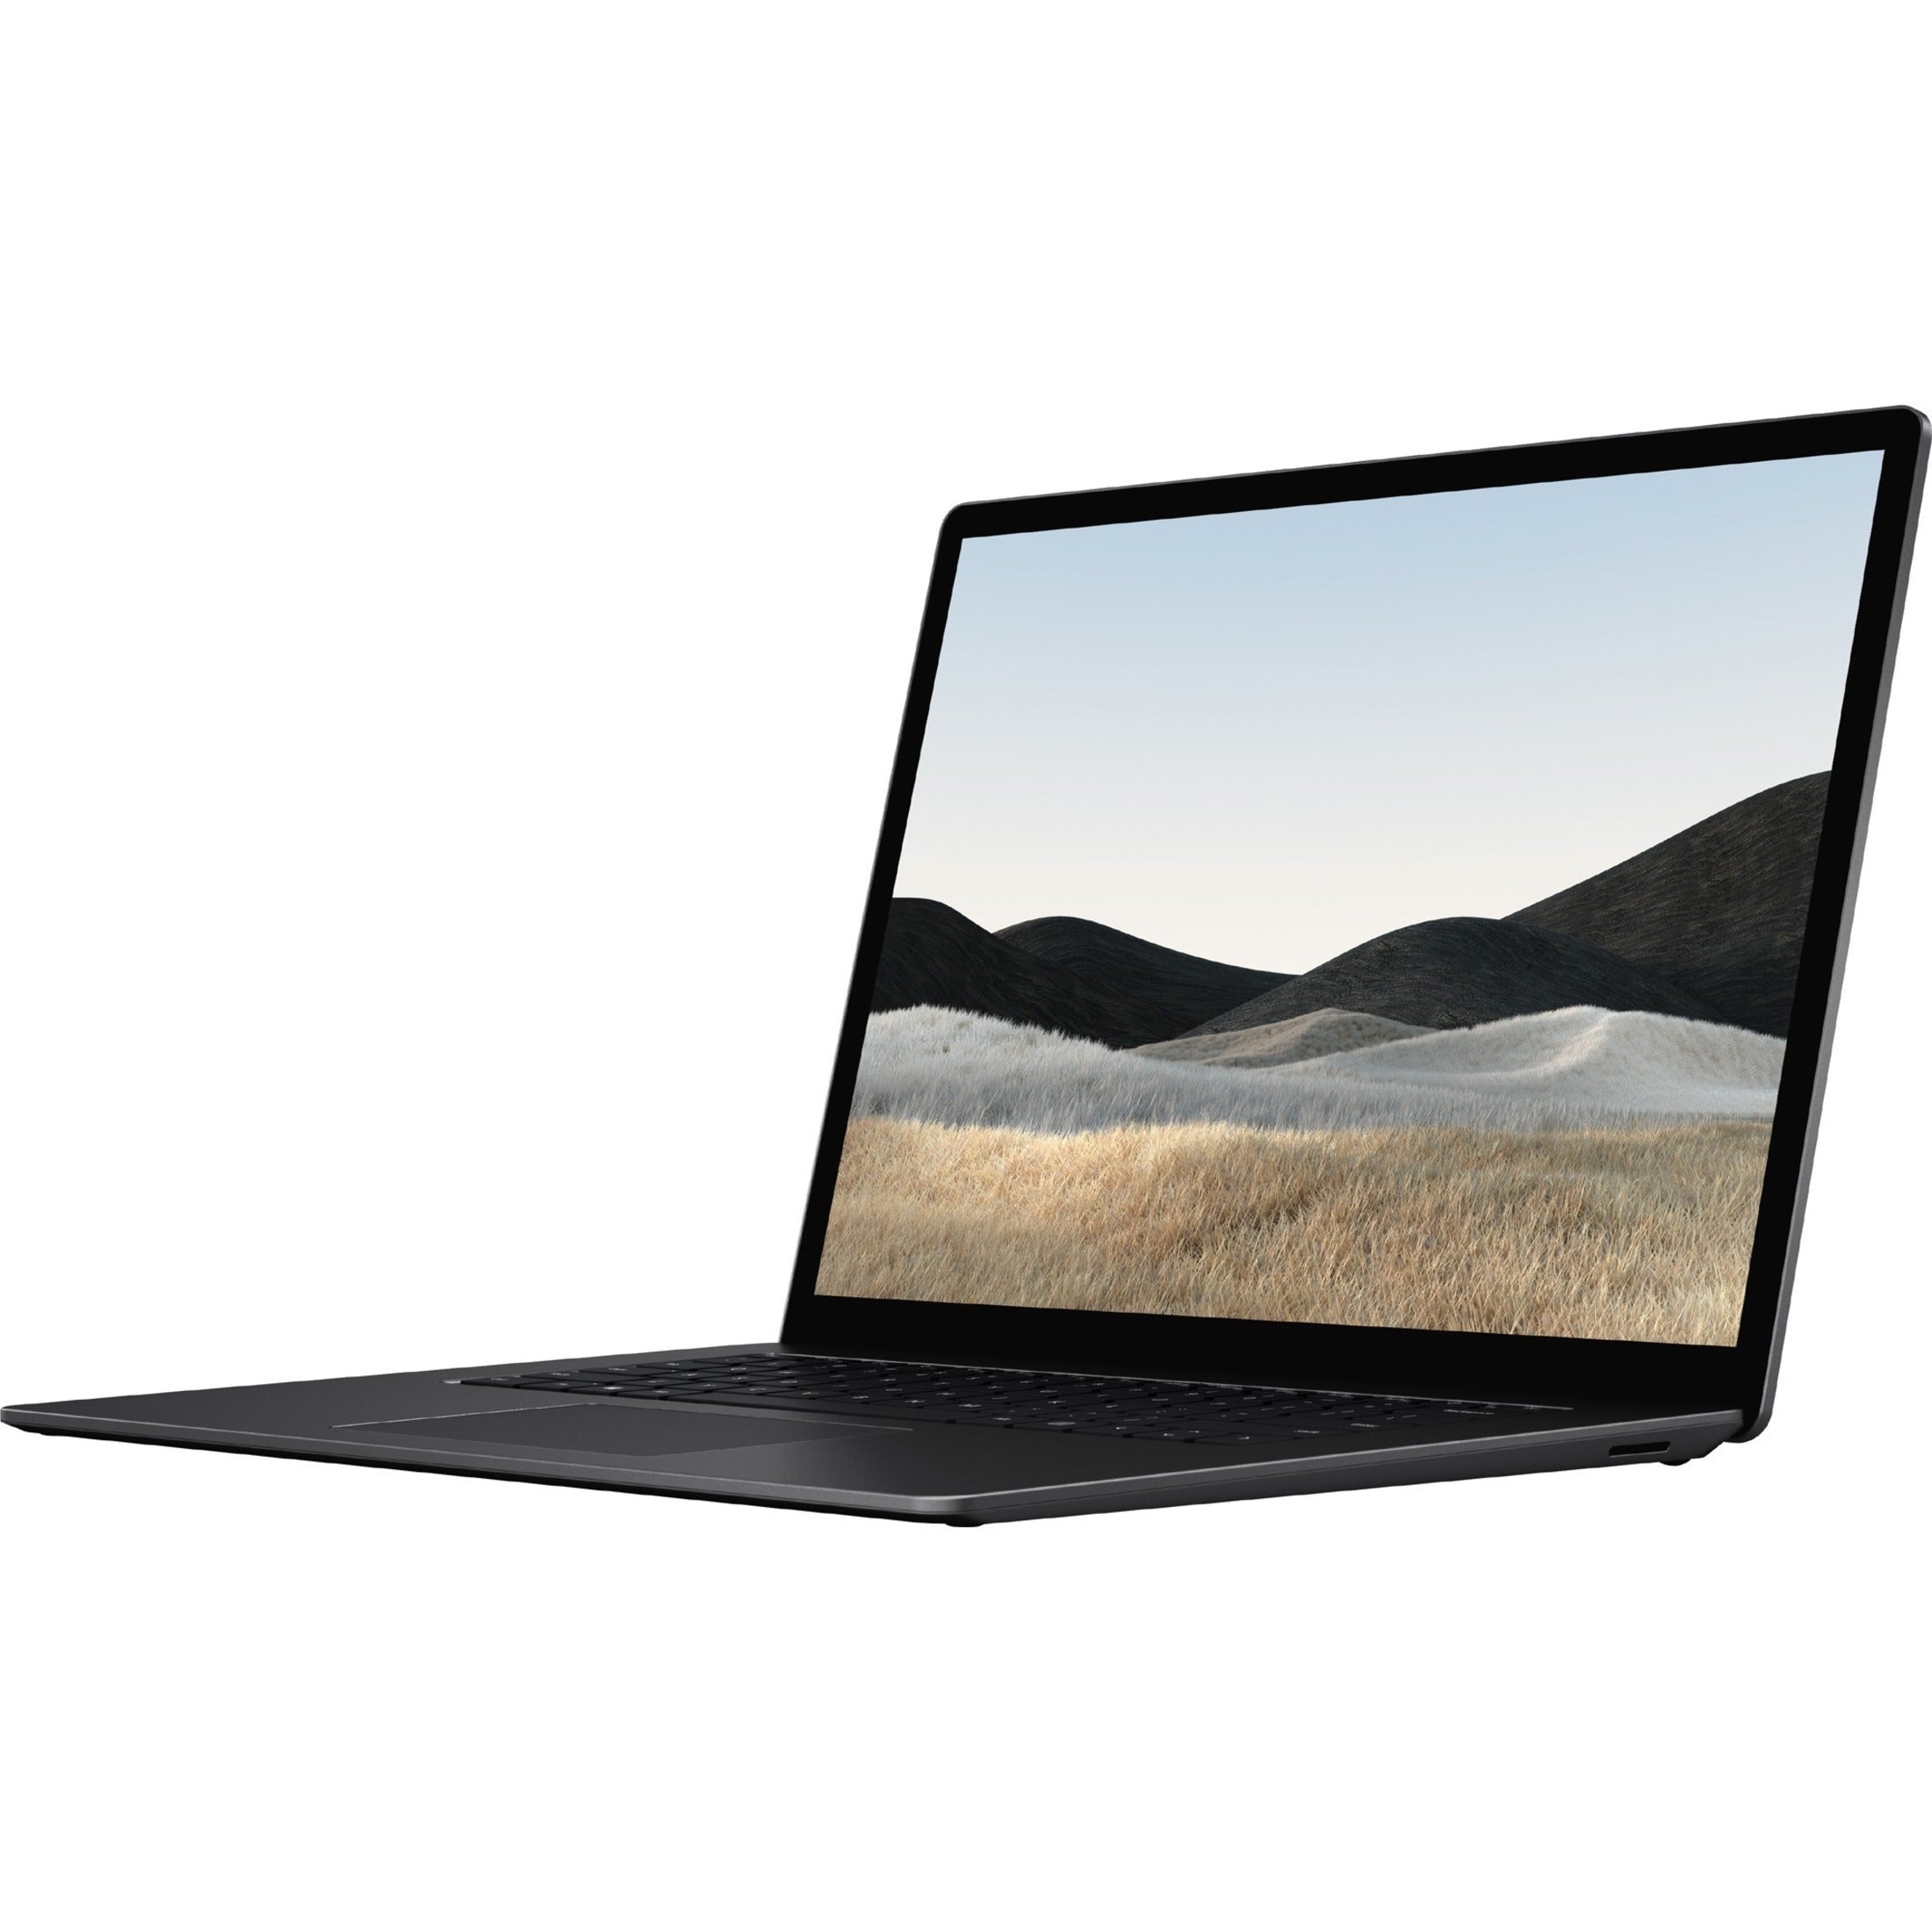 Microsoft 5BV-00001 Surface Laptop 4 Notebook, 13.5 Touchscreen, Core i5, 8GB RAM, 512GB SSD, Windows 10 Pro